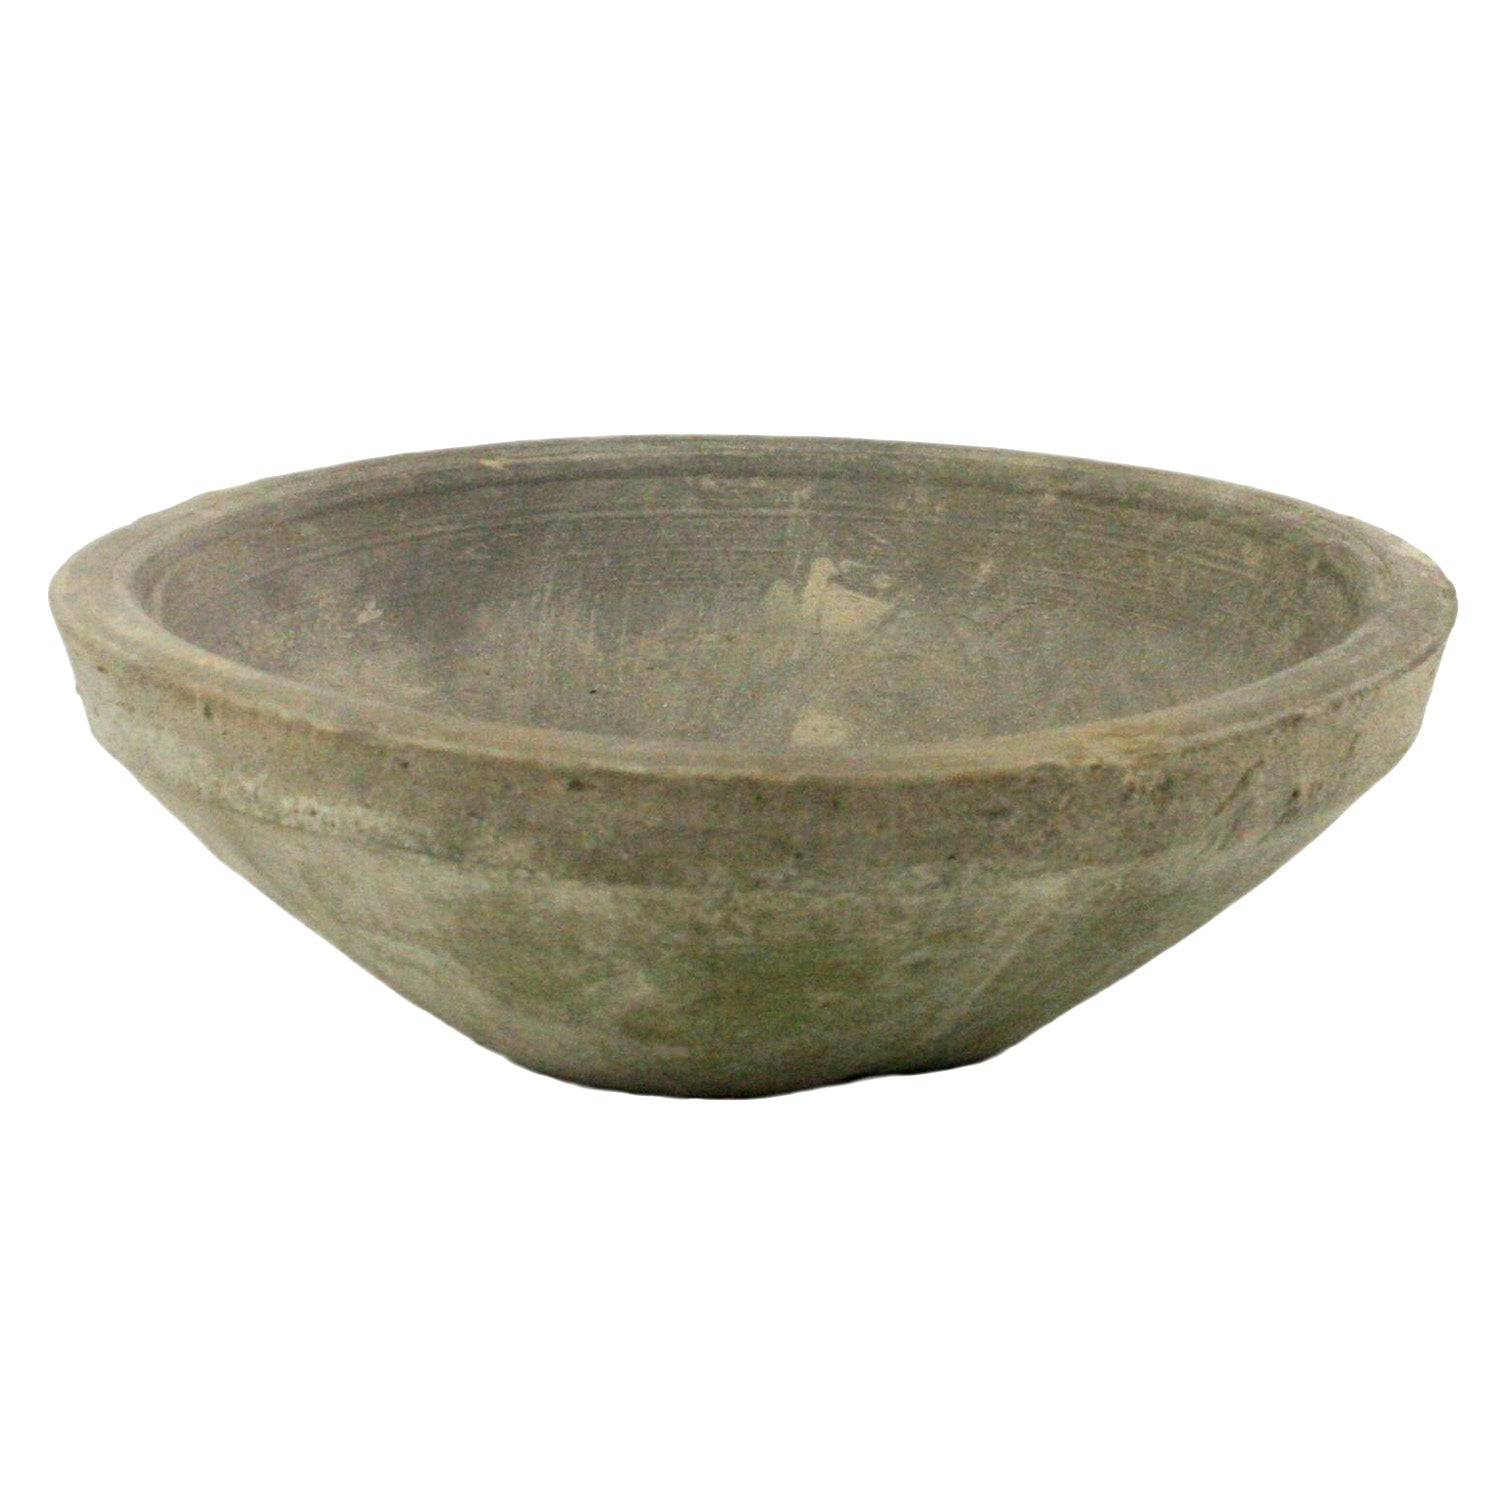 Rustic Terra Cotta Bowl - Sm - Moss Grey (5610057138333)